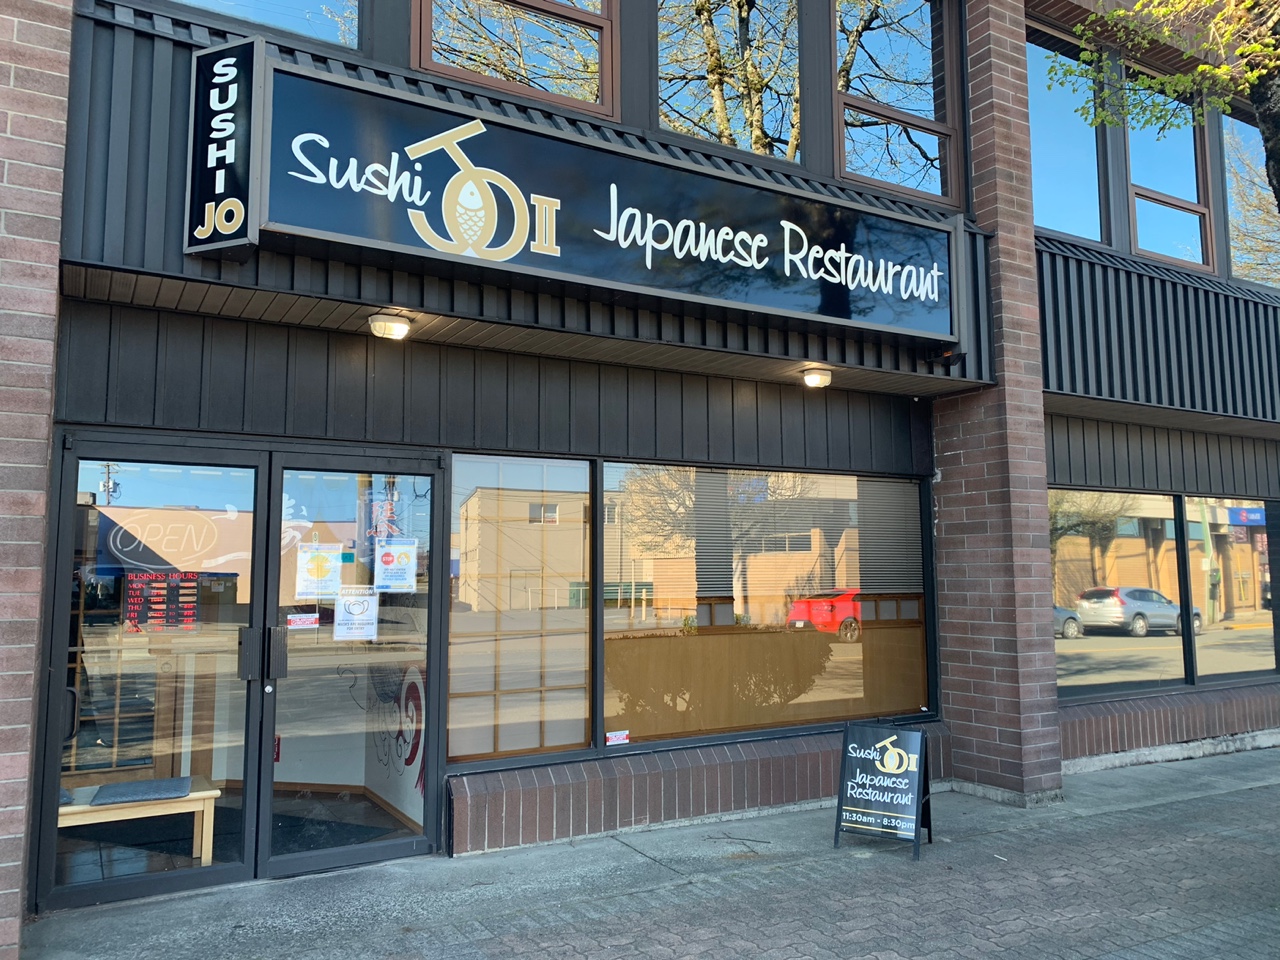 Sushi Jo Japanese Restaurant